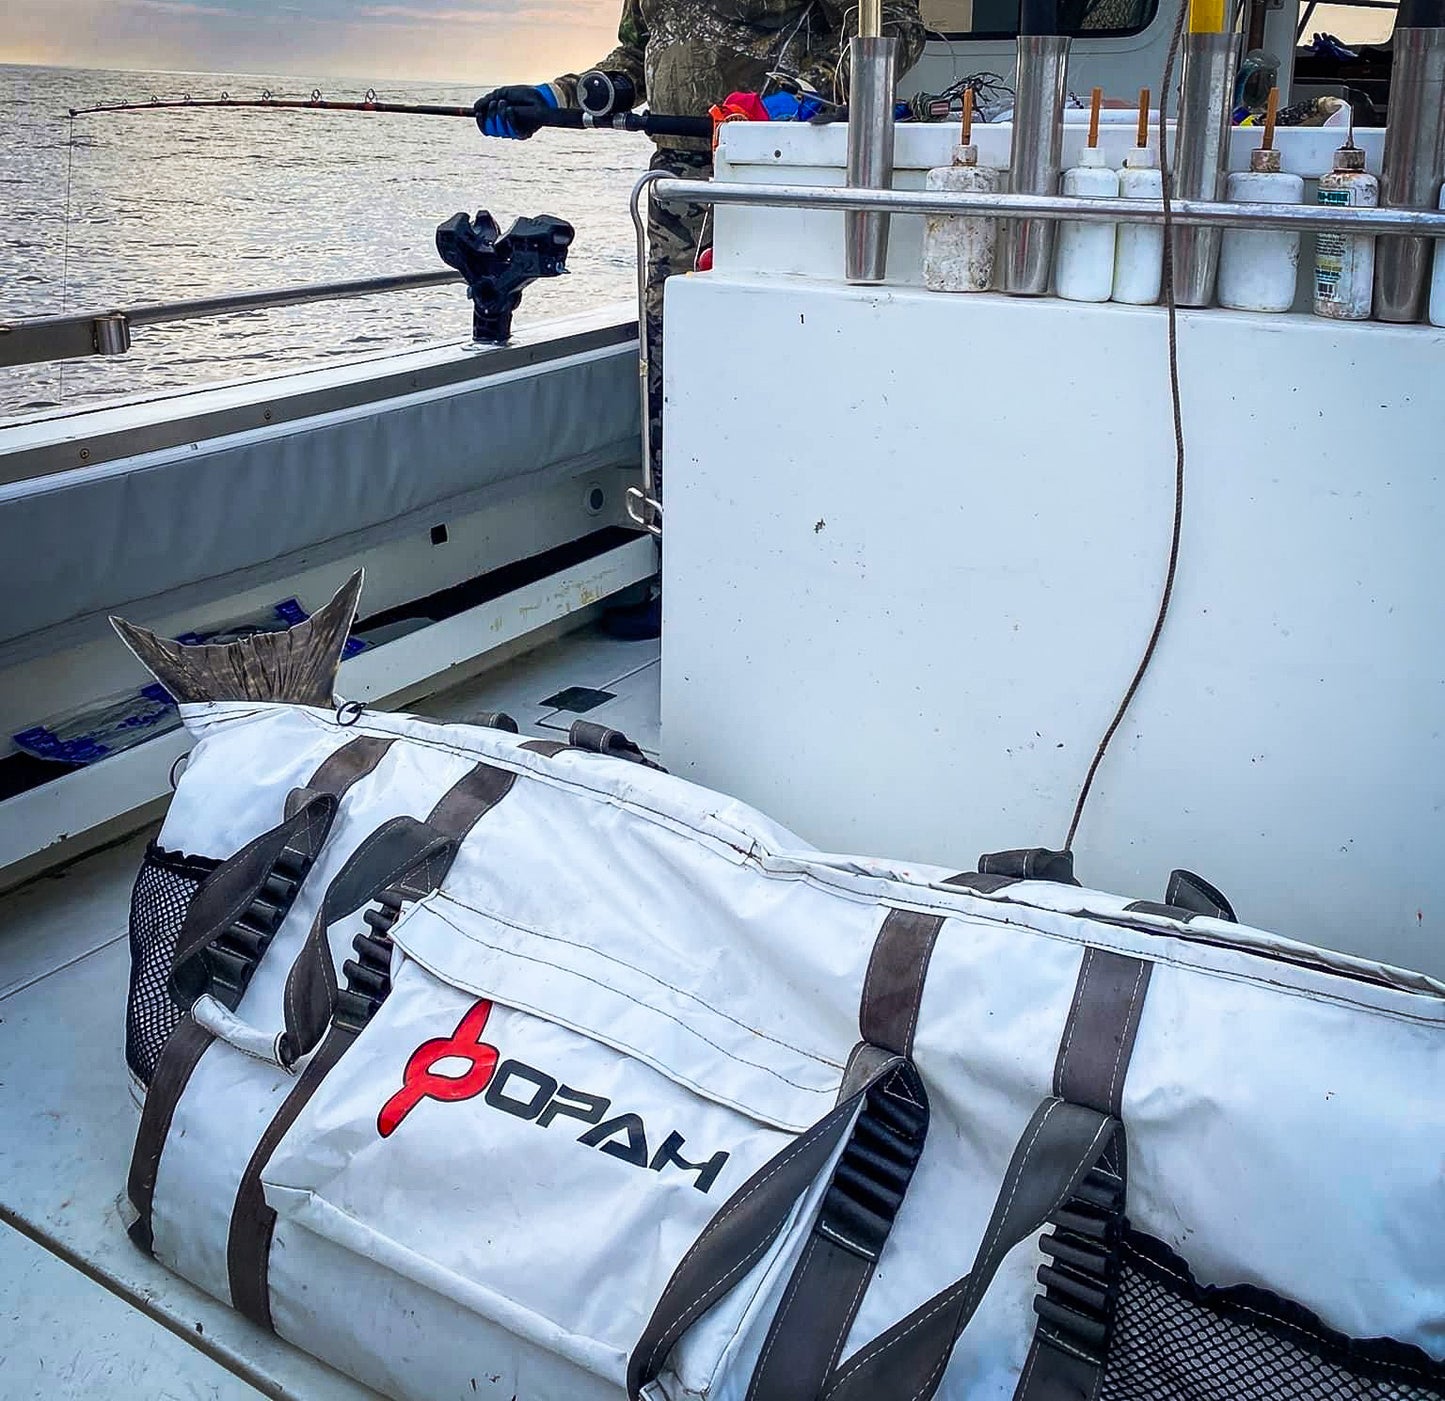 Opah Was Featured In Pacific Coast Sportfishing Magazine! – Opah Gear  Fishing Bags